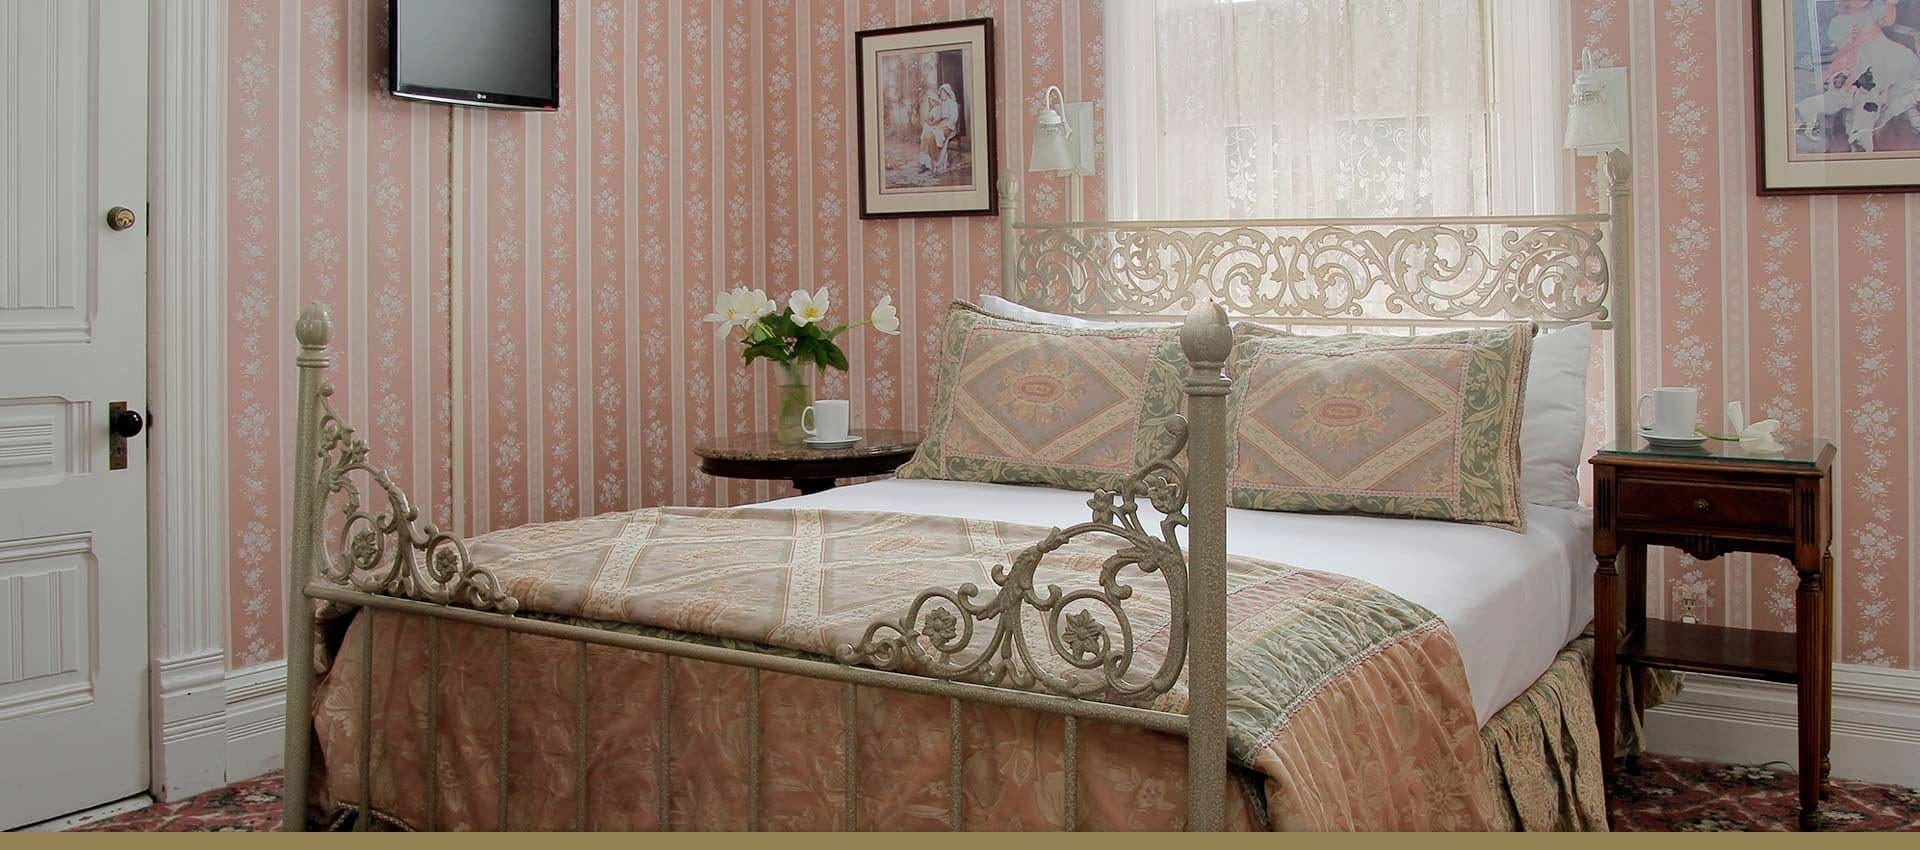 Victorian Village Inn Emily Rose suite bedroom